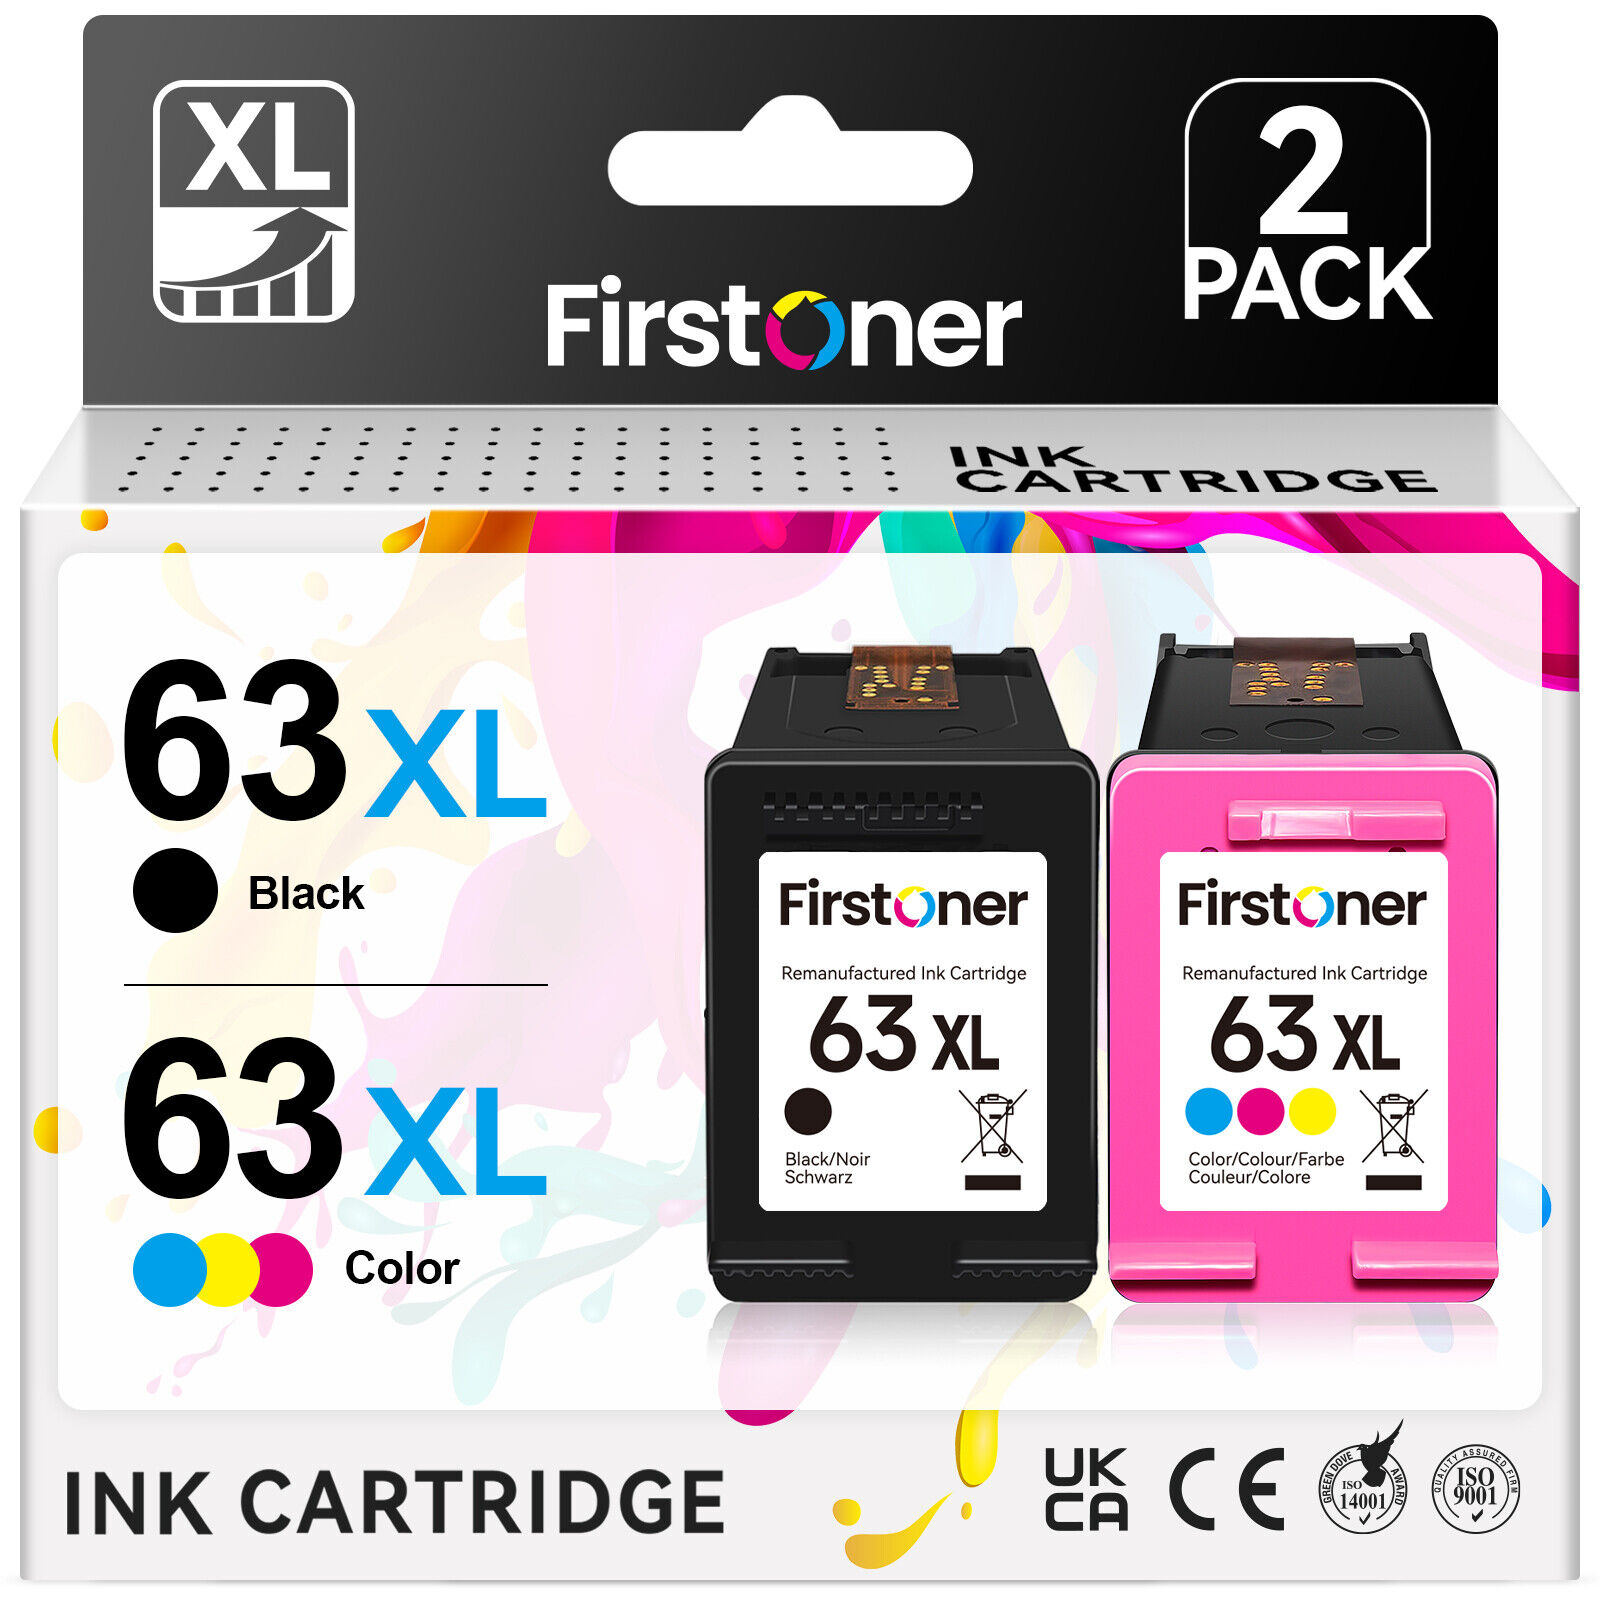 2PK 63XL Black Color Ink Cartridge Set for HP OfficeJet 3830 5255 Envy 4520 4528